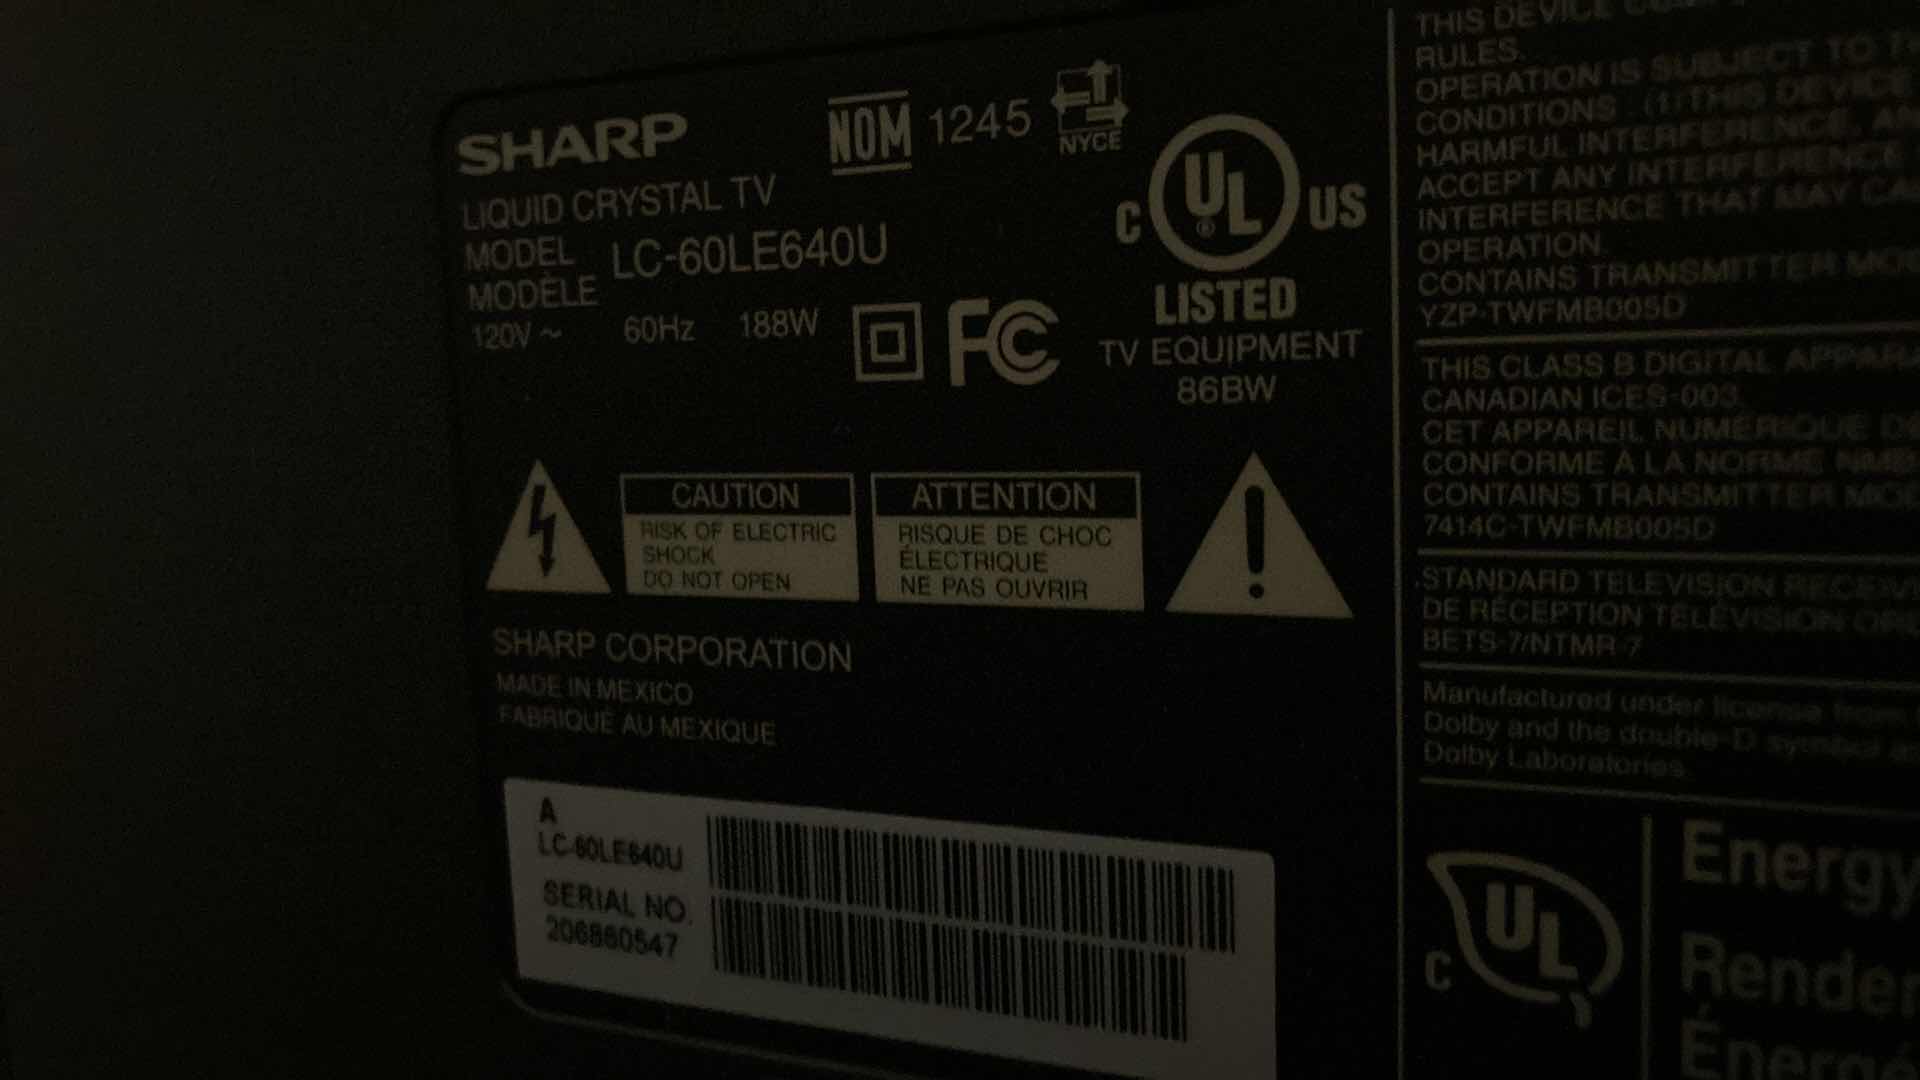 Photo 3 of SHARP AQUOS 60” LCD TV MODEL LC-60LE640U W REMOTE